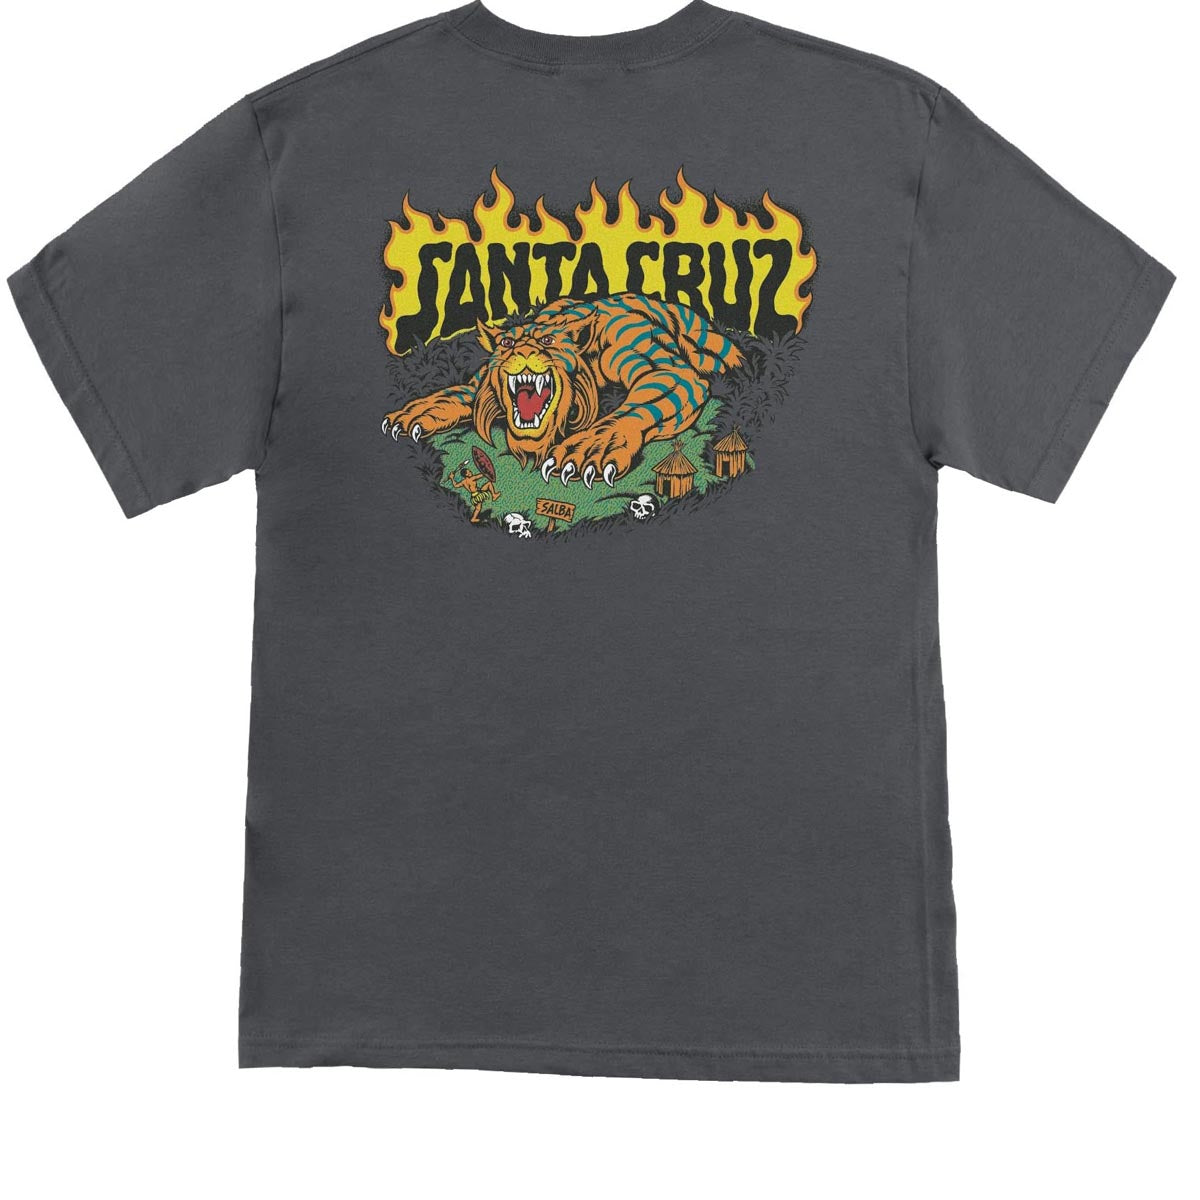 Santa Cruz Salba Tiger Redux T-Shirt - Charcoal image 1